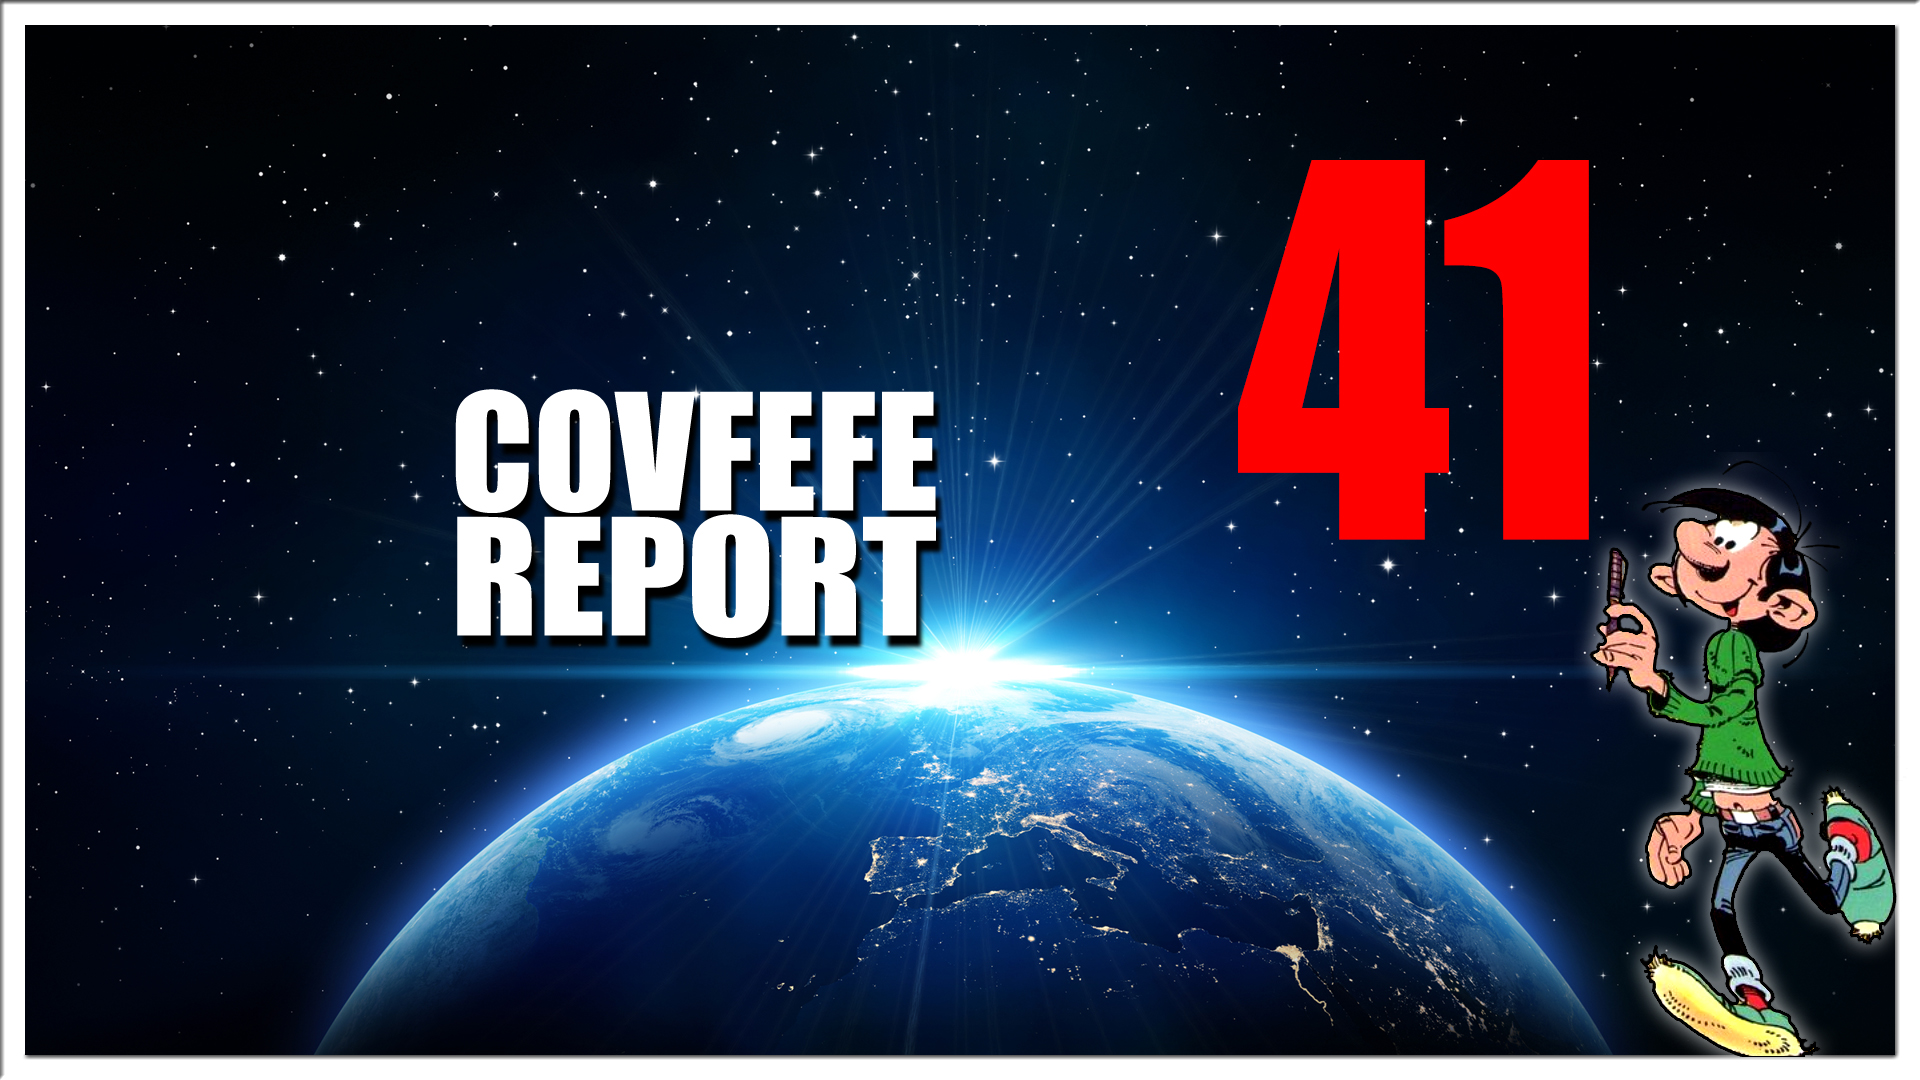 Covfefe Report 41. Melania Trump, We stand United, Disney